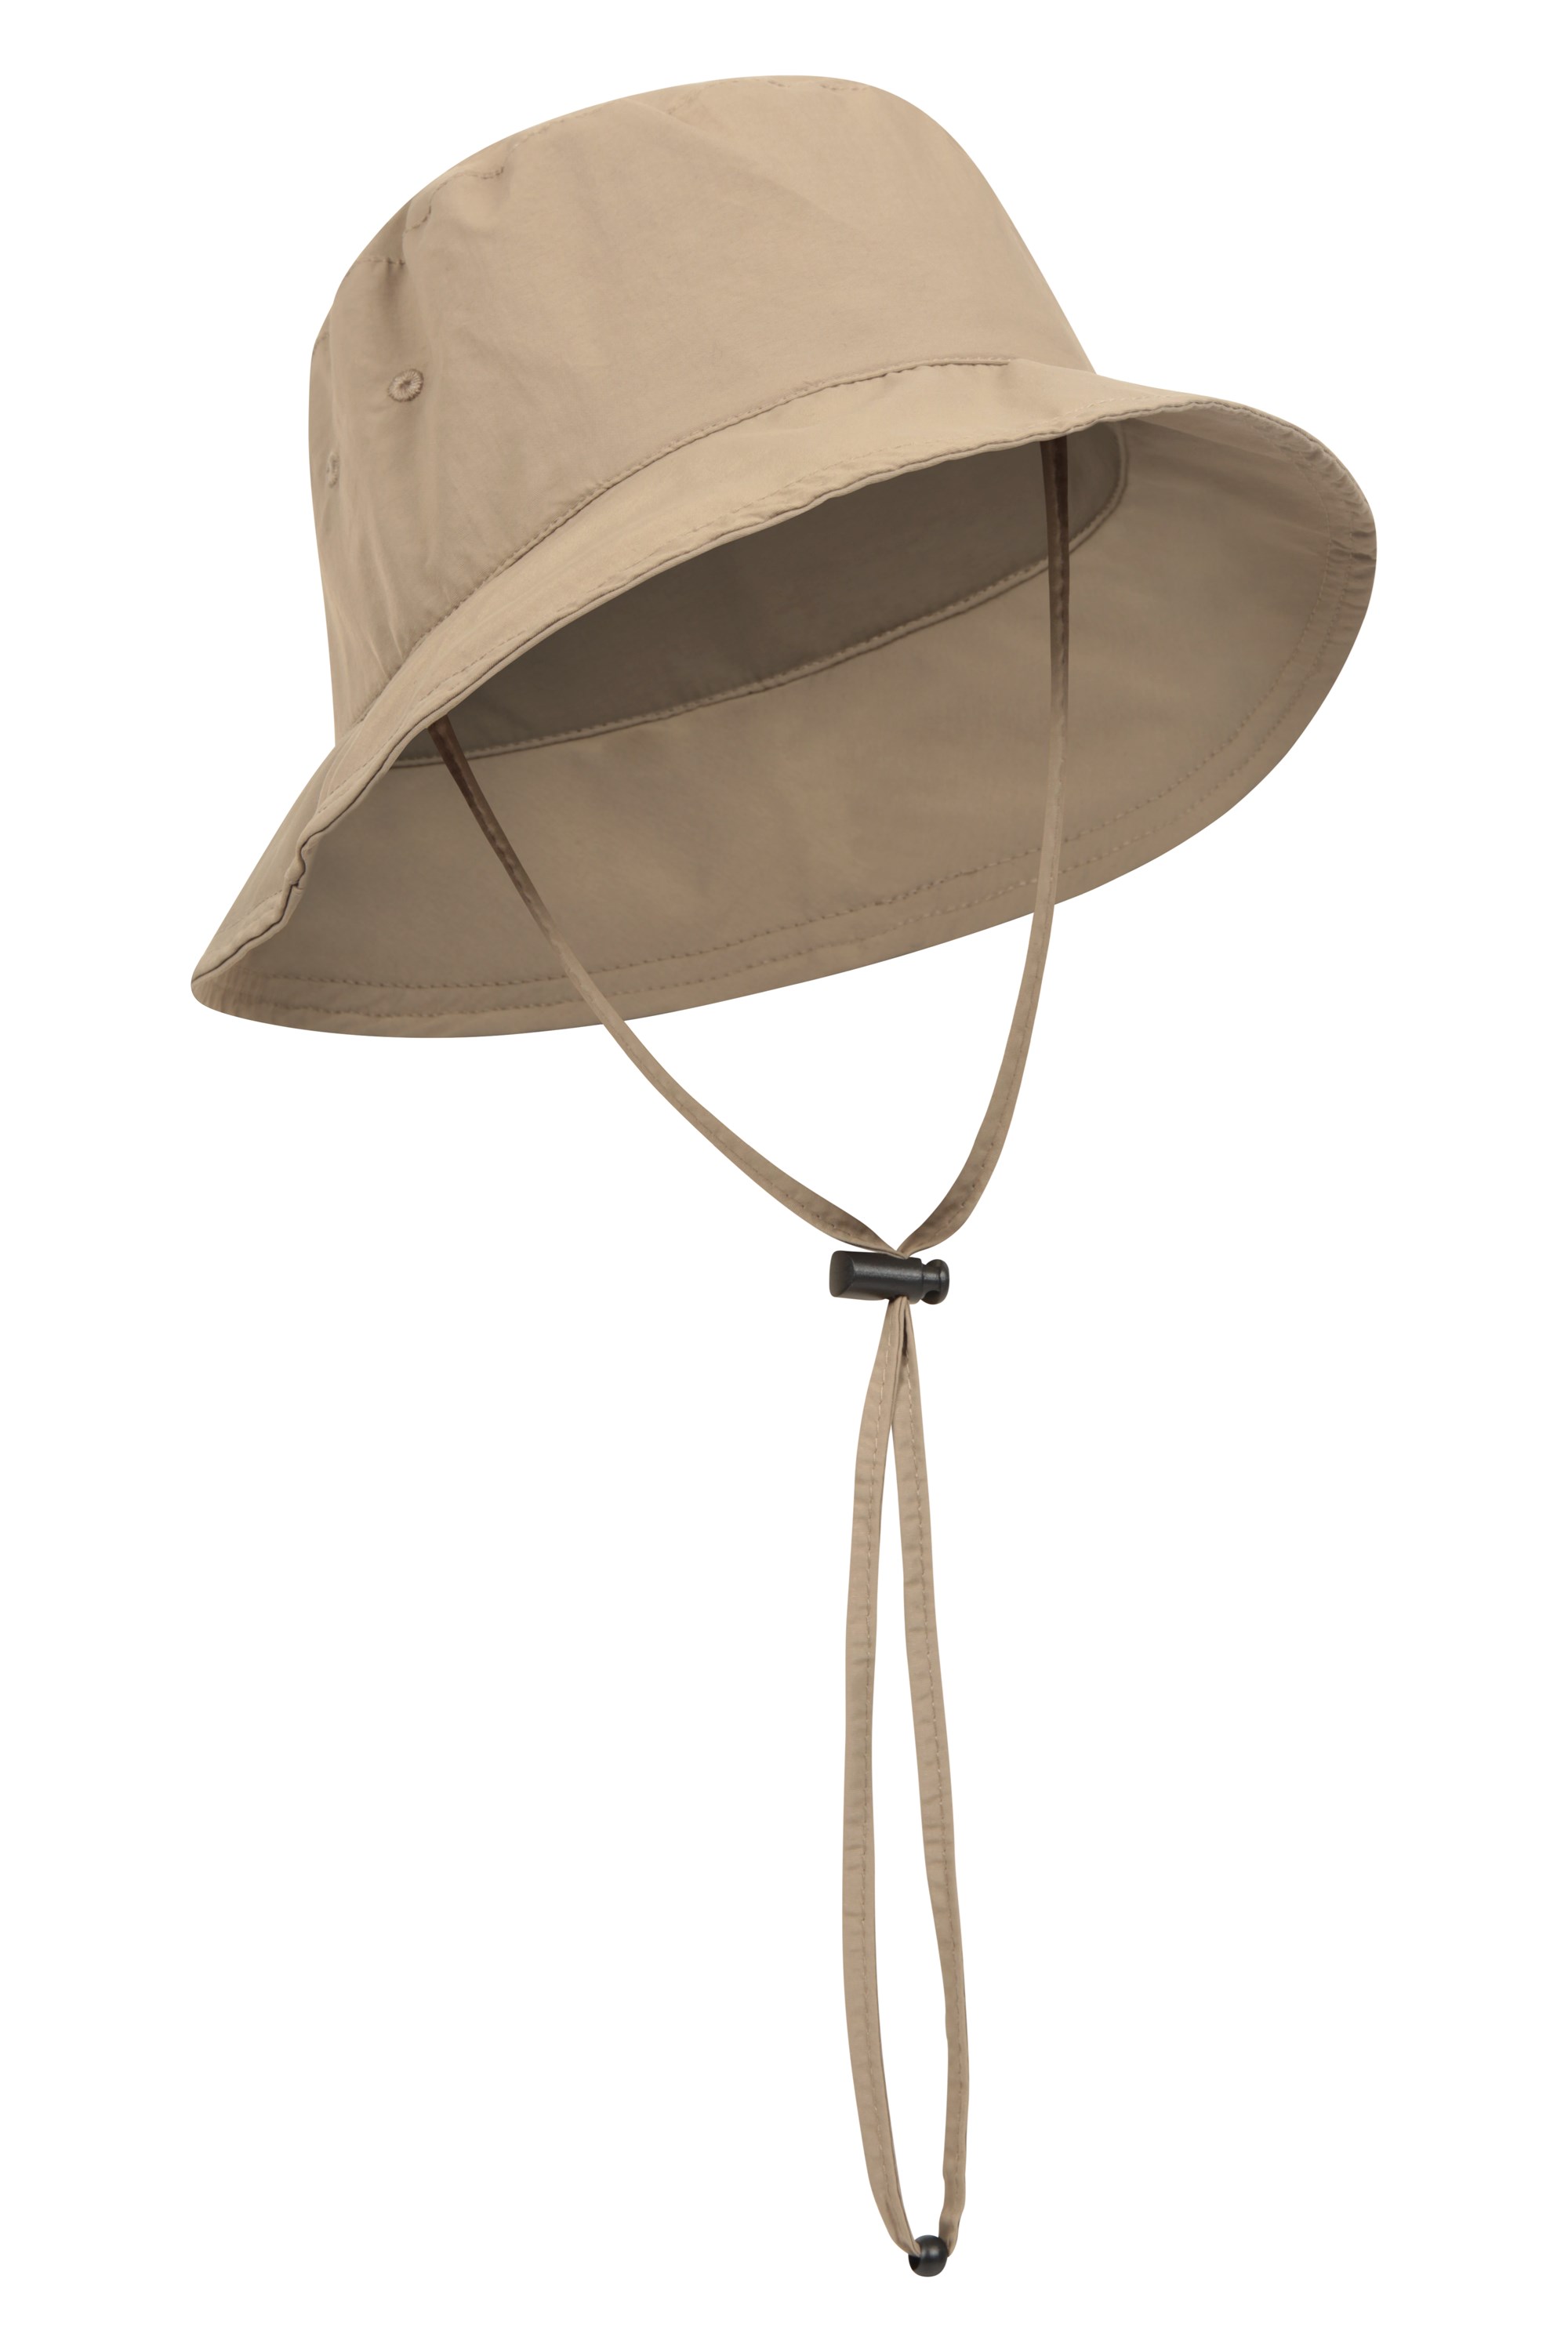 IsoDry Mens Bucket Hat